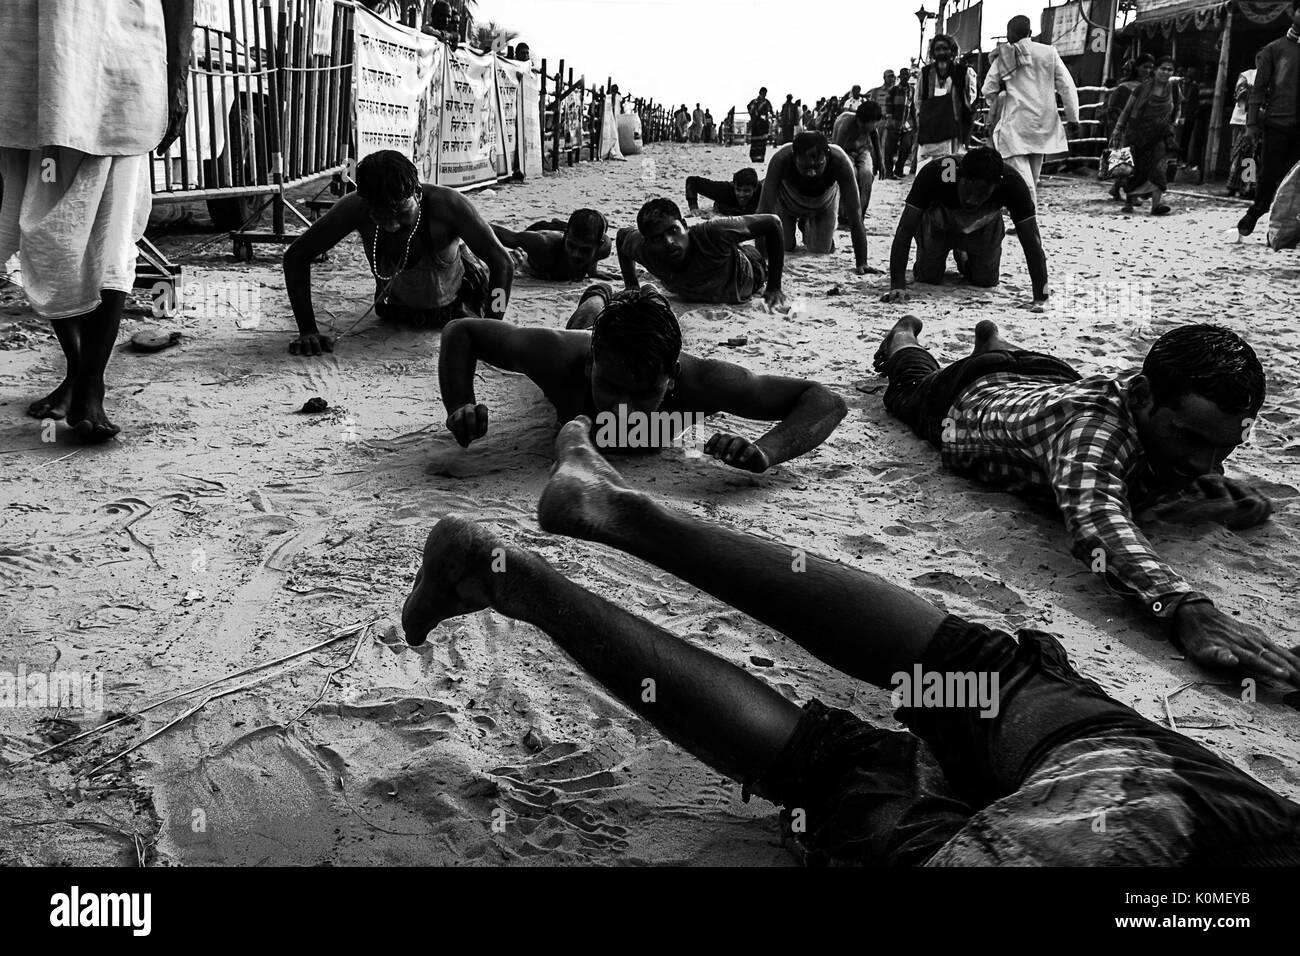 Menschen kriechen religiöses Ritual Ganga sagar Kolkata, West Bengal Indien Asien Stockfoto